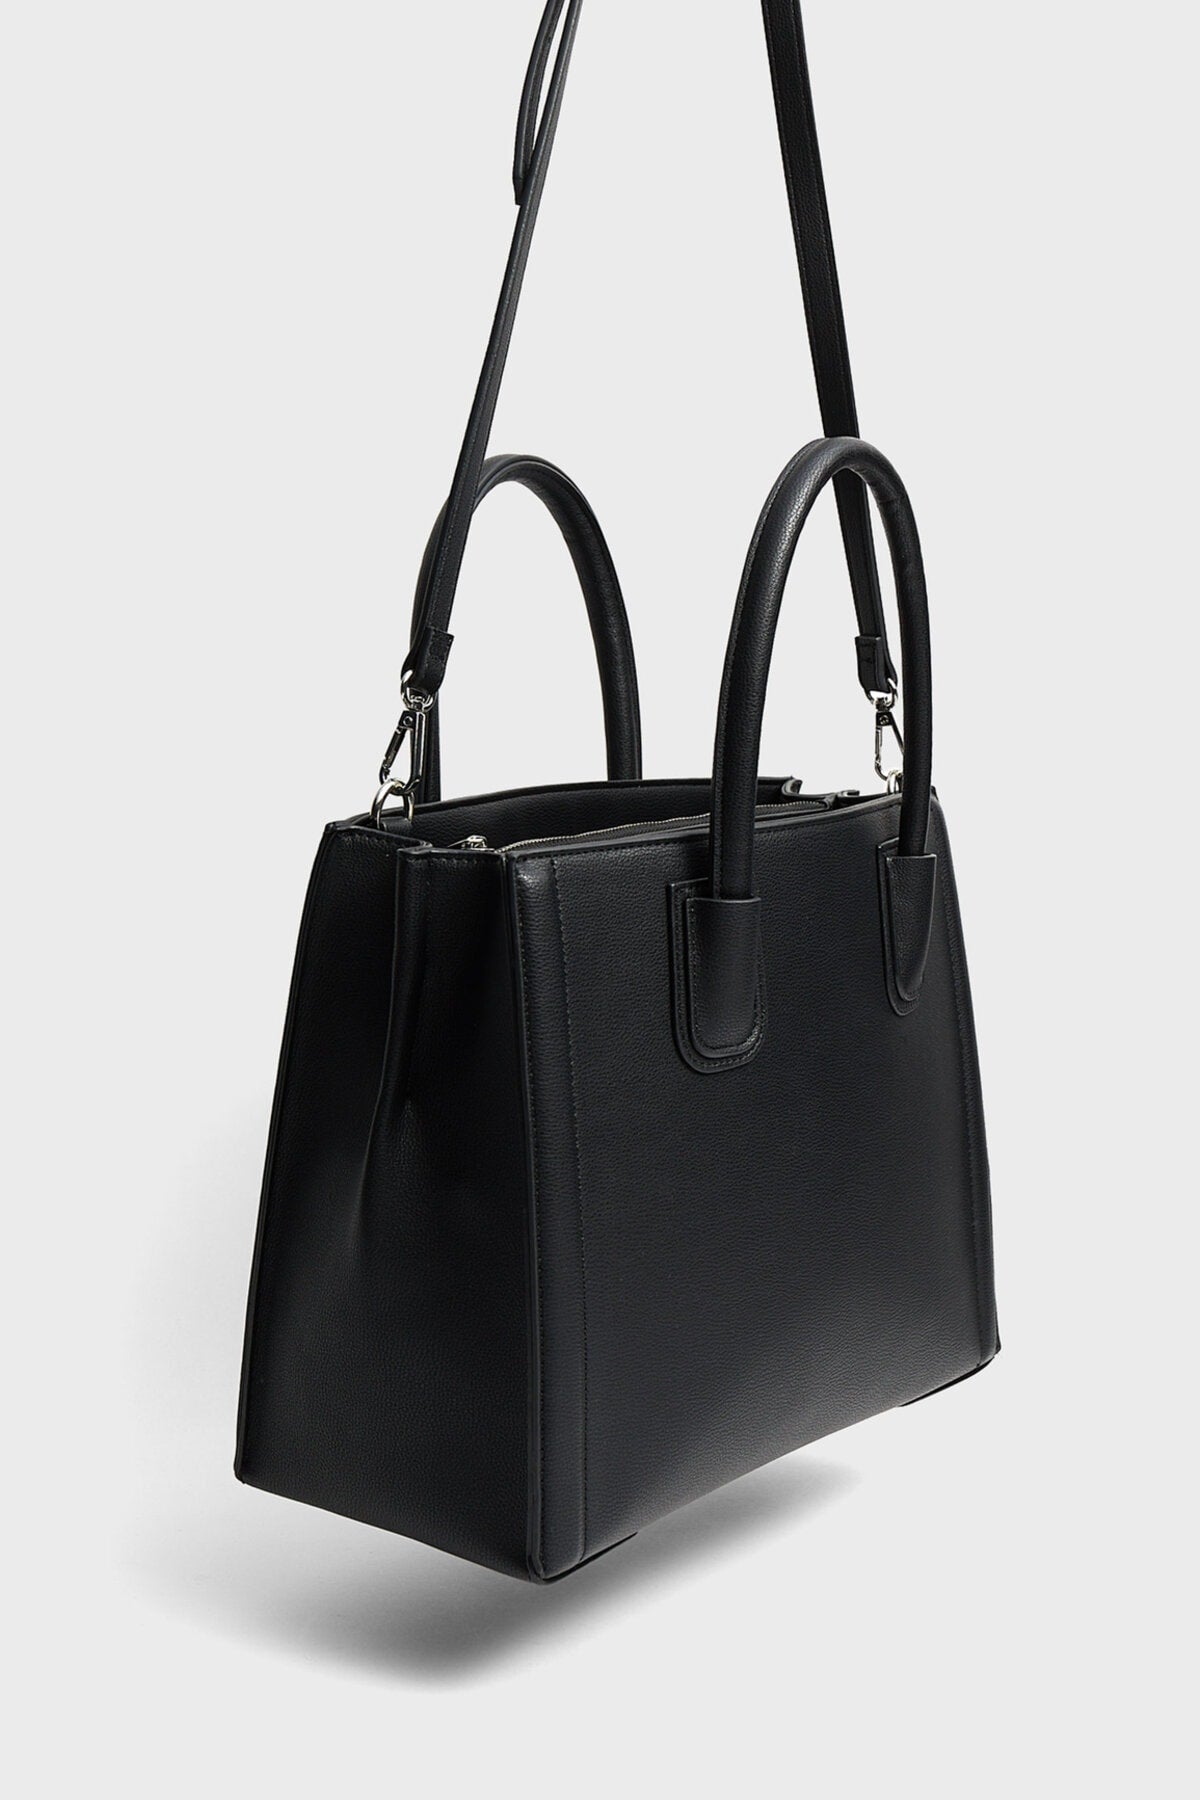 Women's Black Hard Tote Bag 00525001